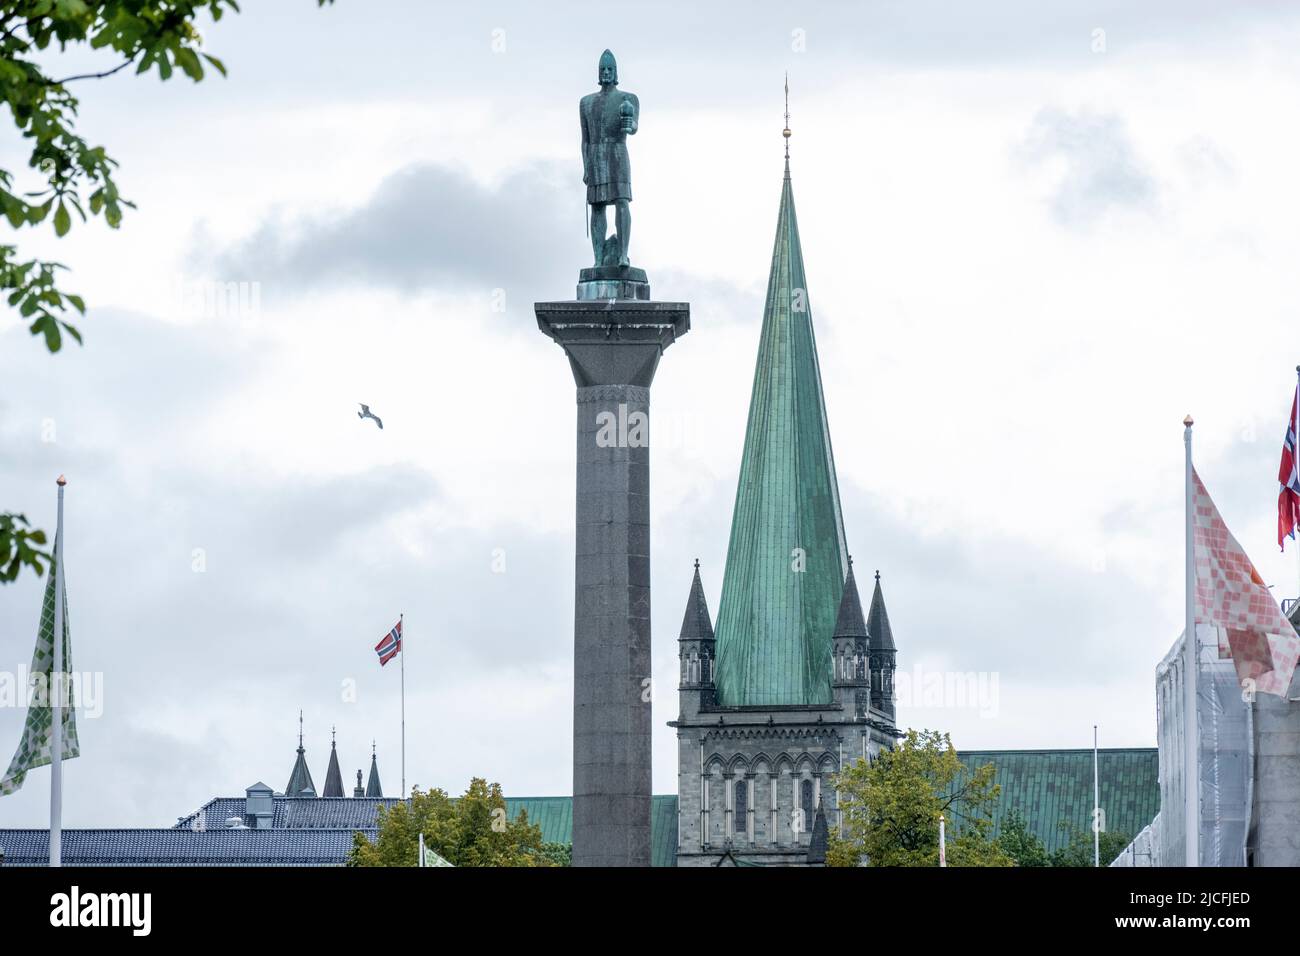 Norway, Trøndelag, Trondheim, Olav Tryggvason statue with Nidaros Cathedral. Stock Photo